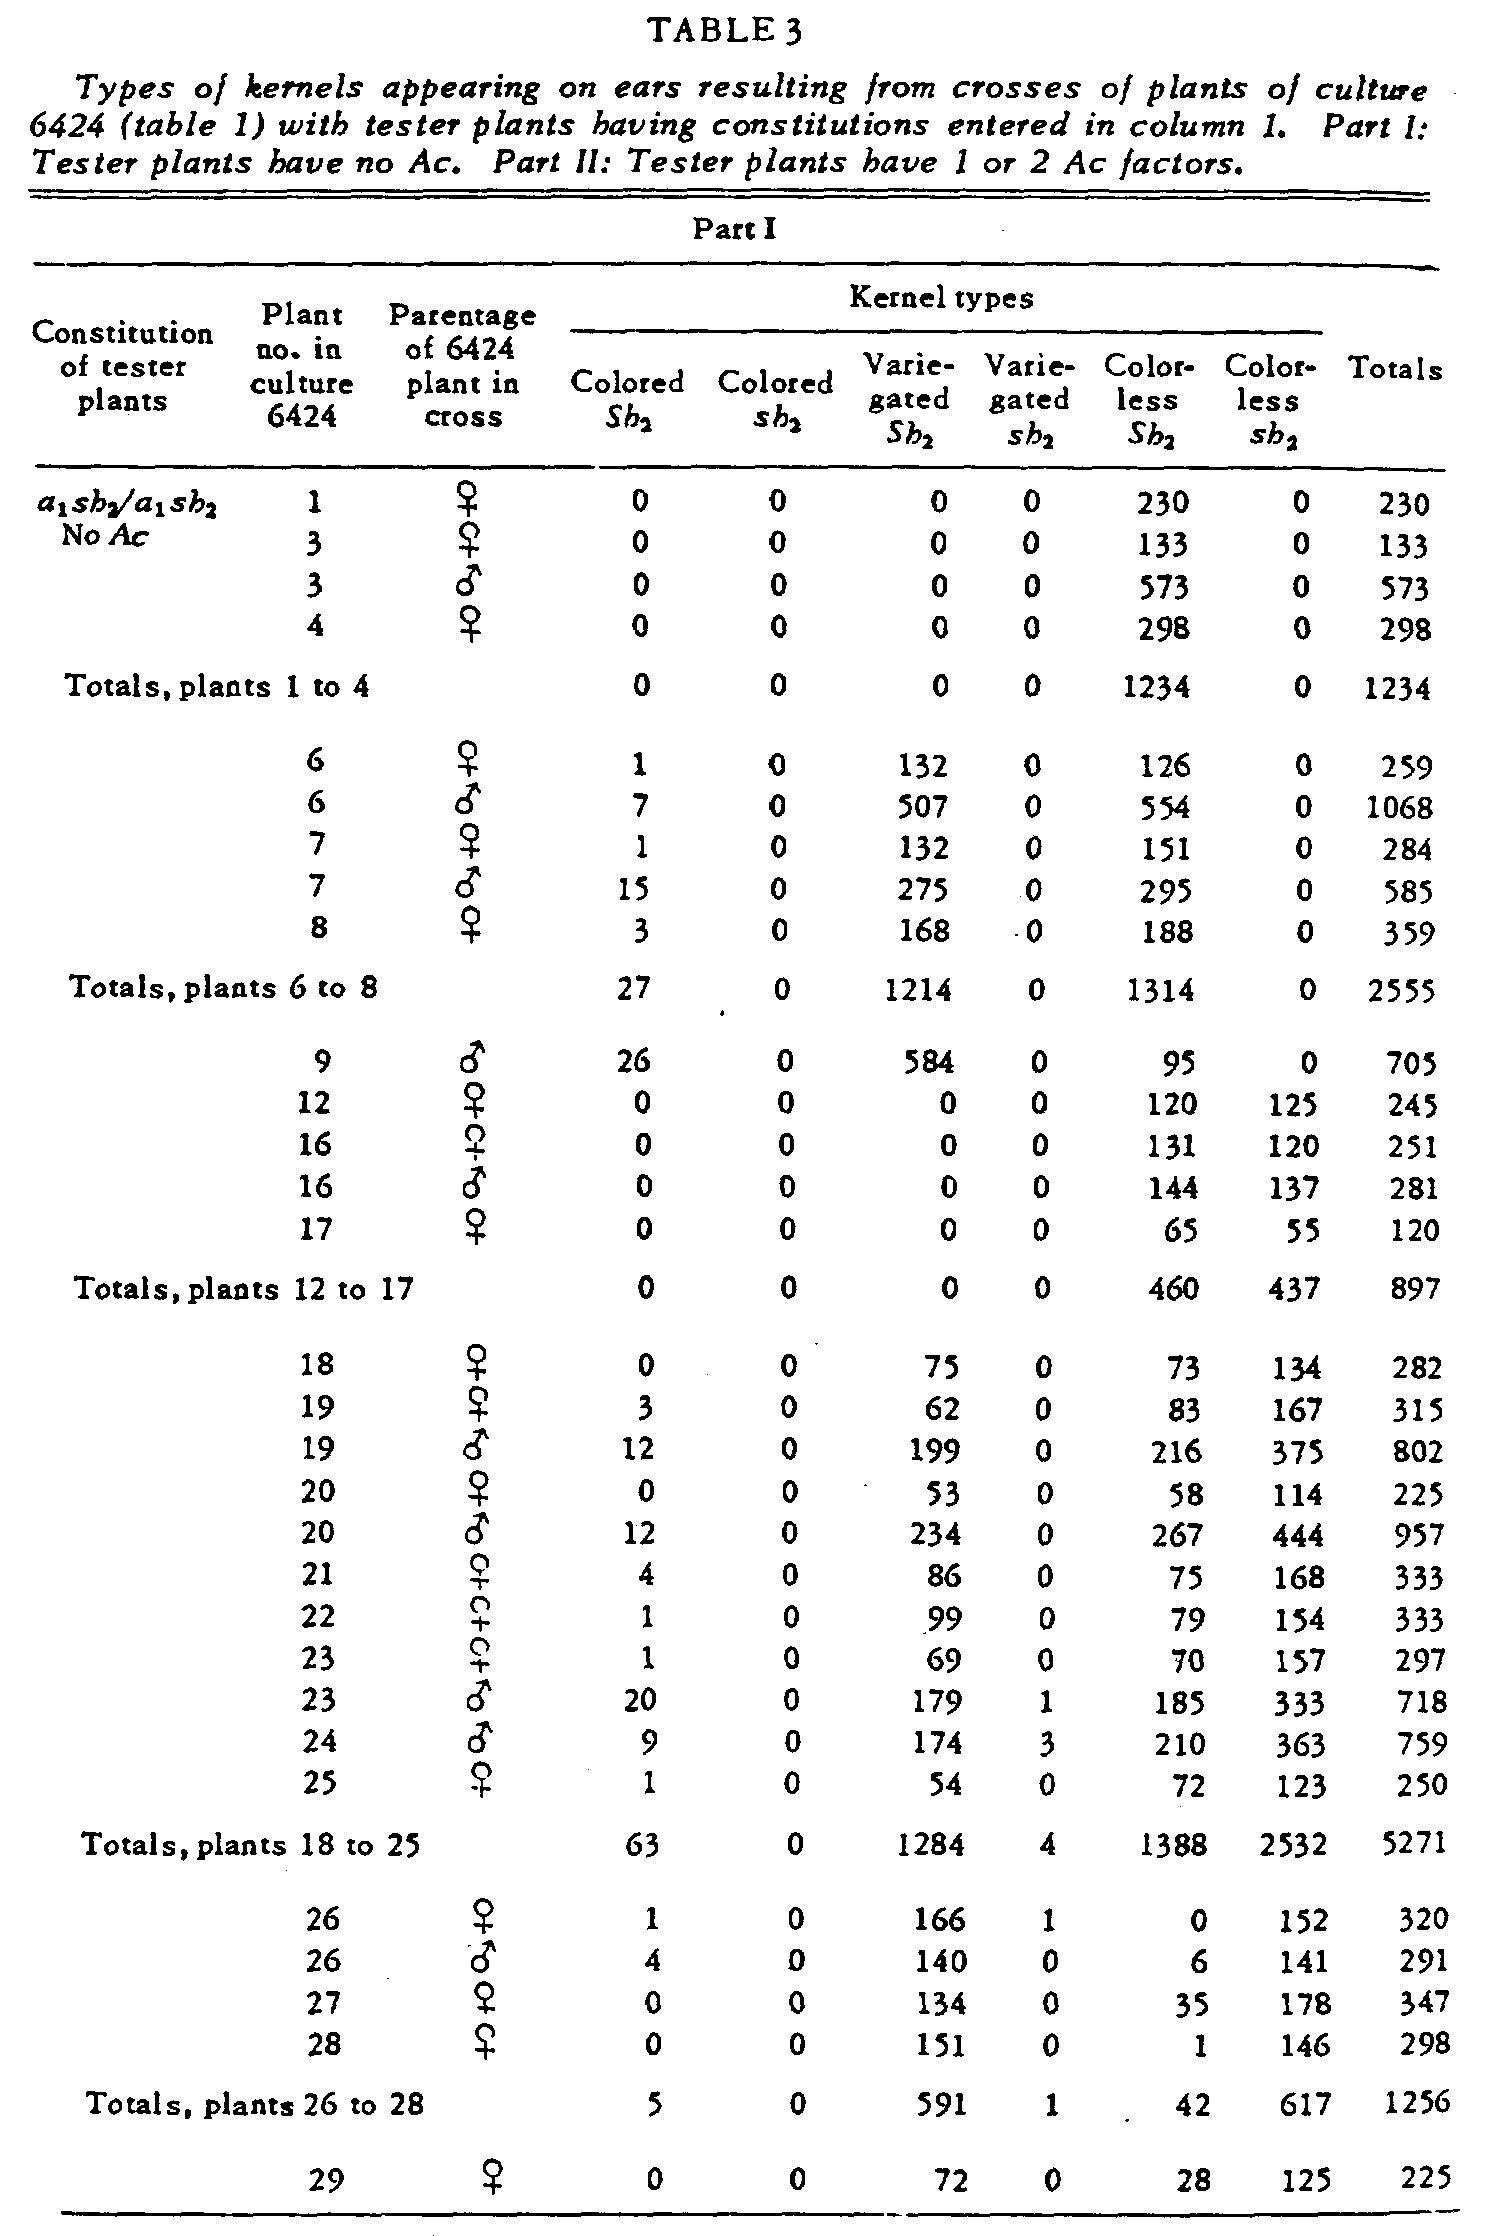 McClintock 1950, Table 3